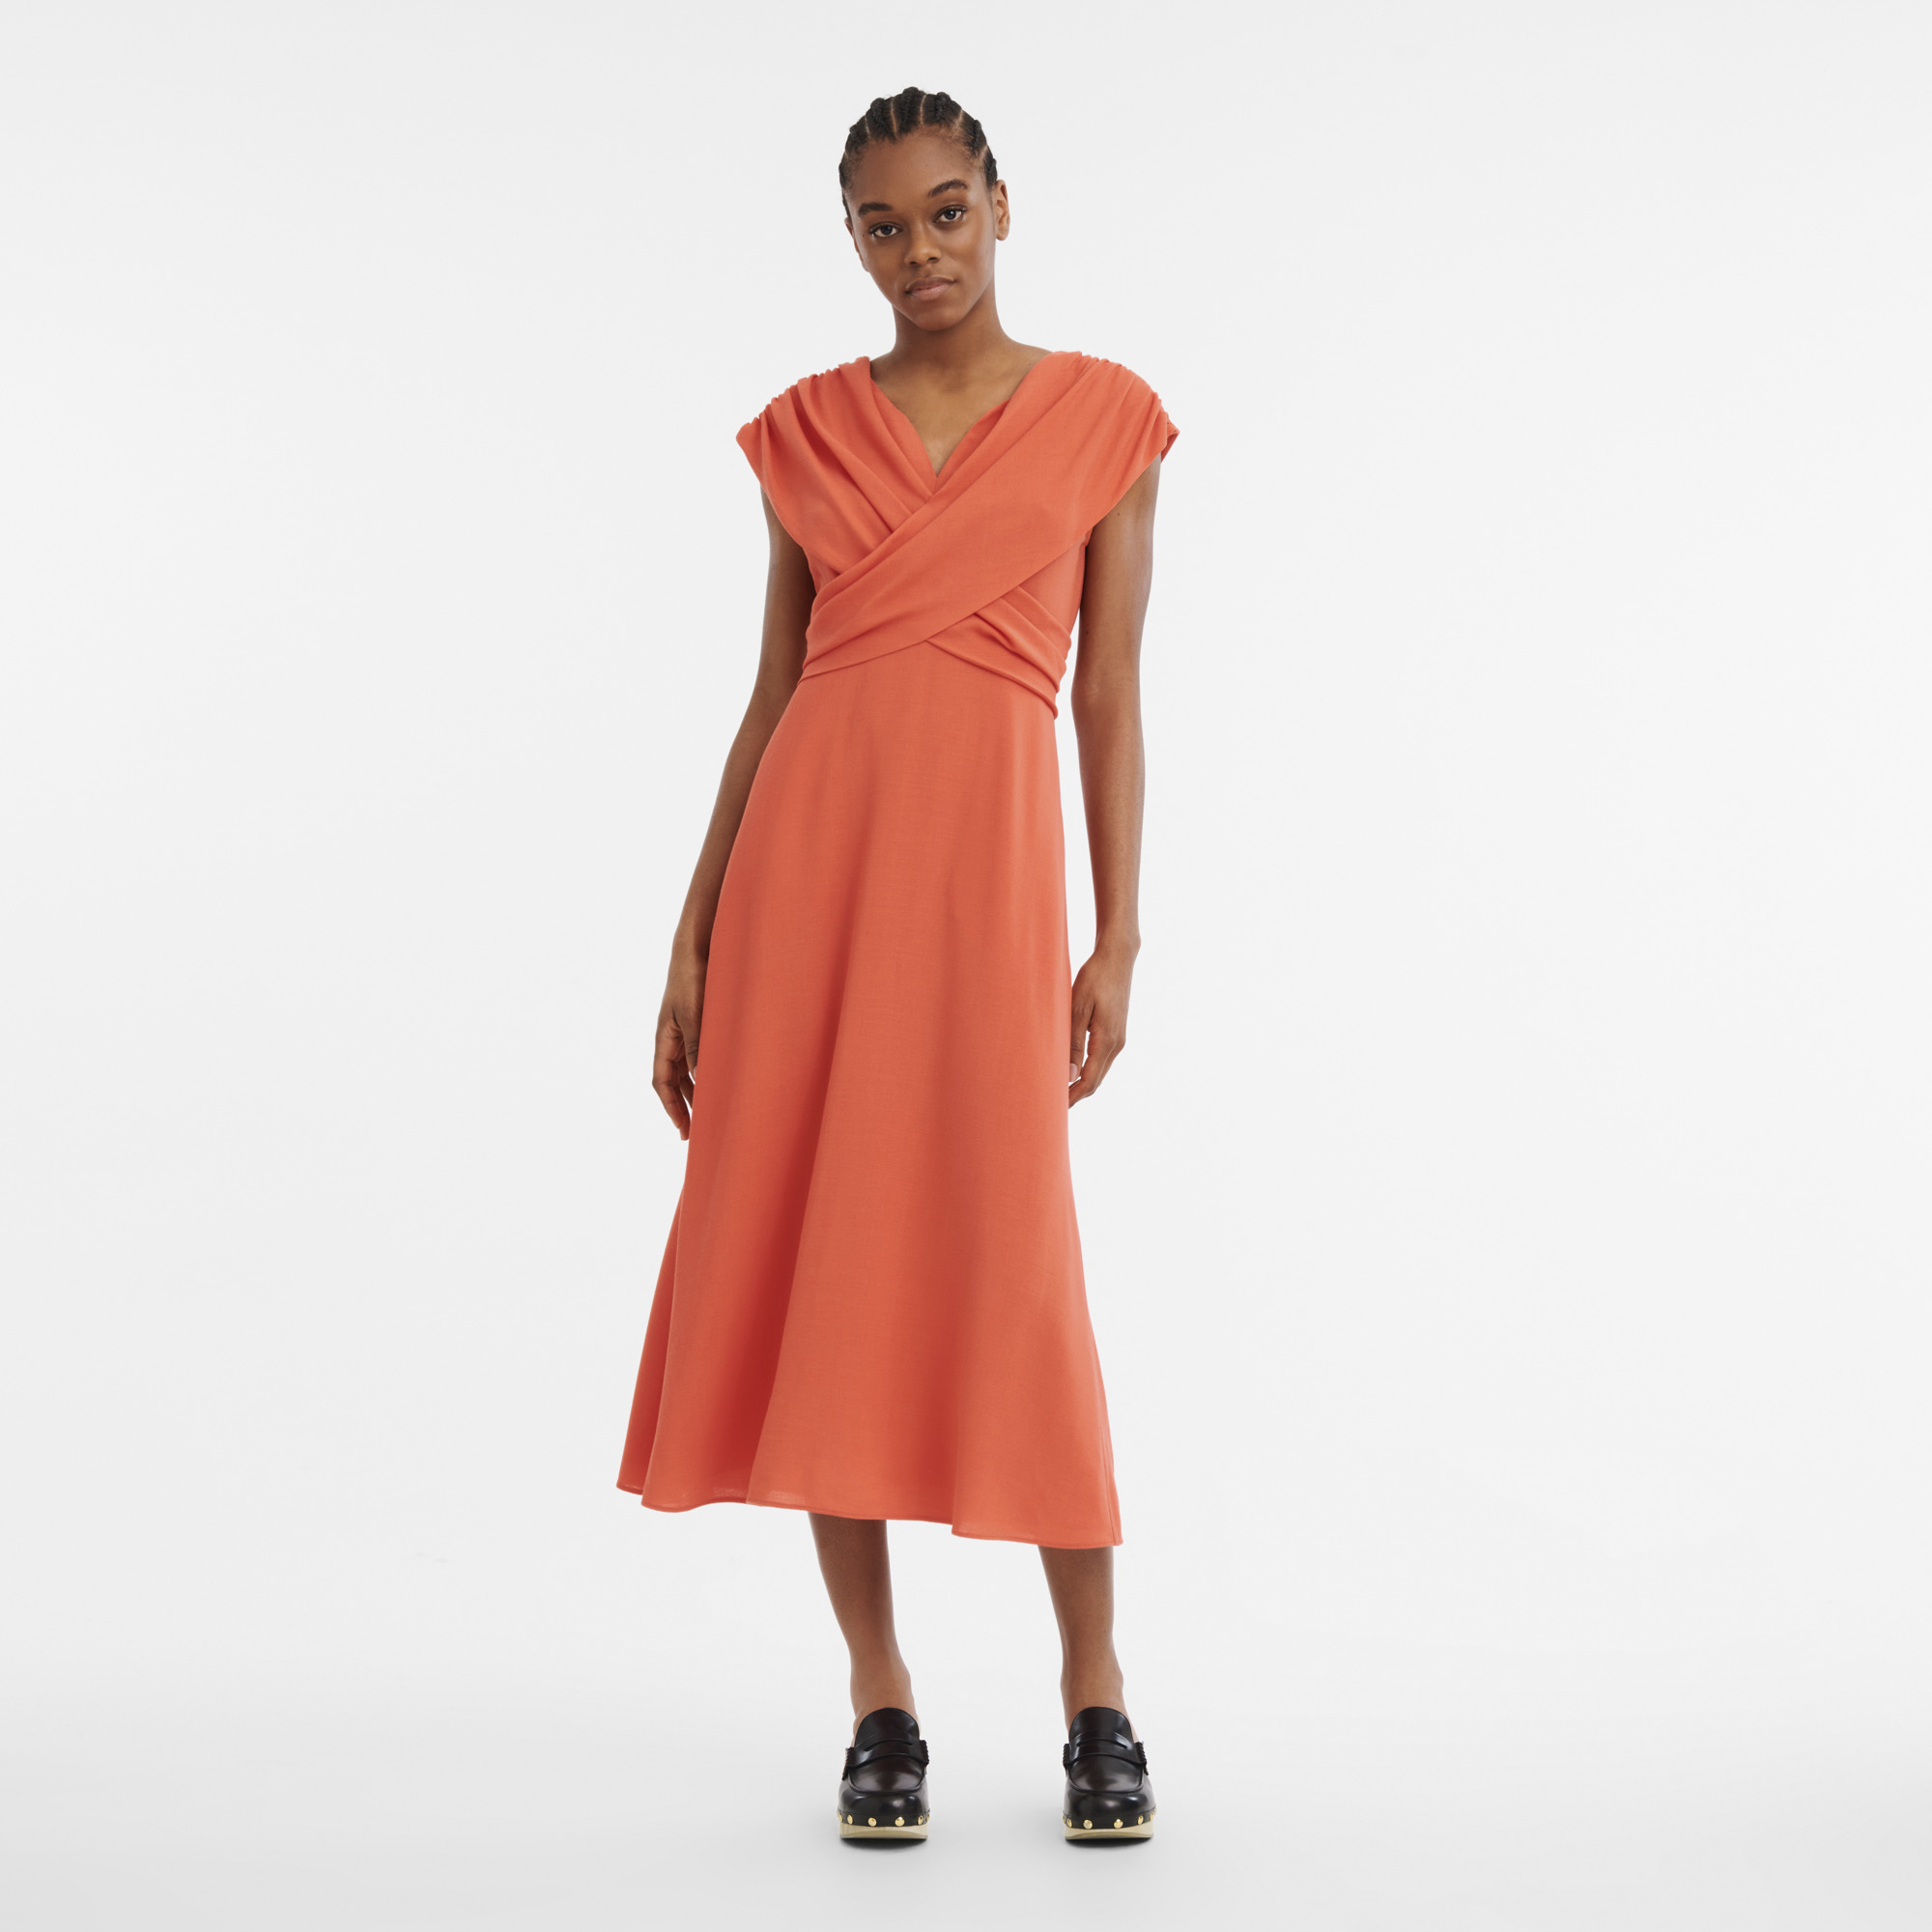 Dress Orange - Crepe - 2